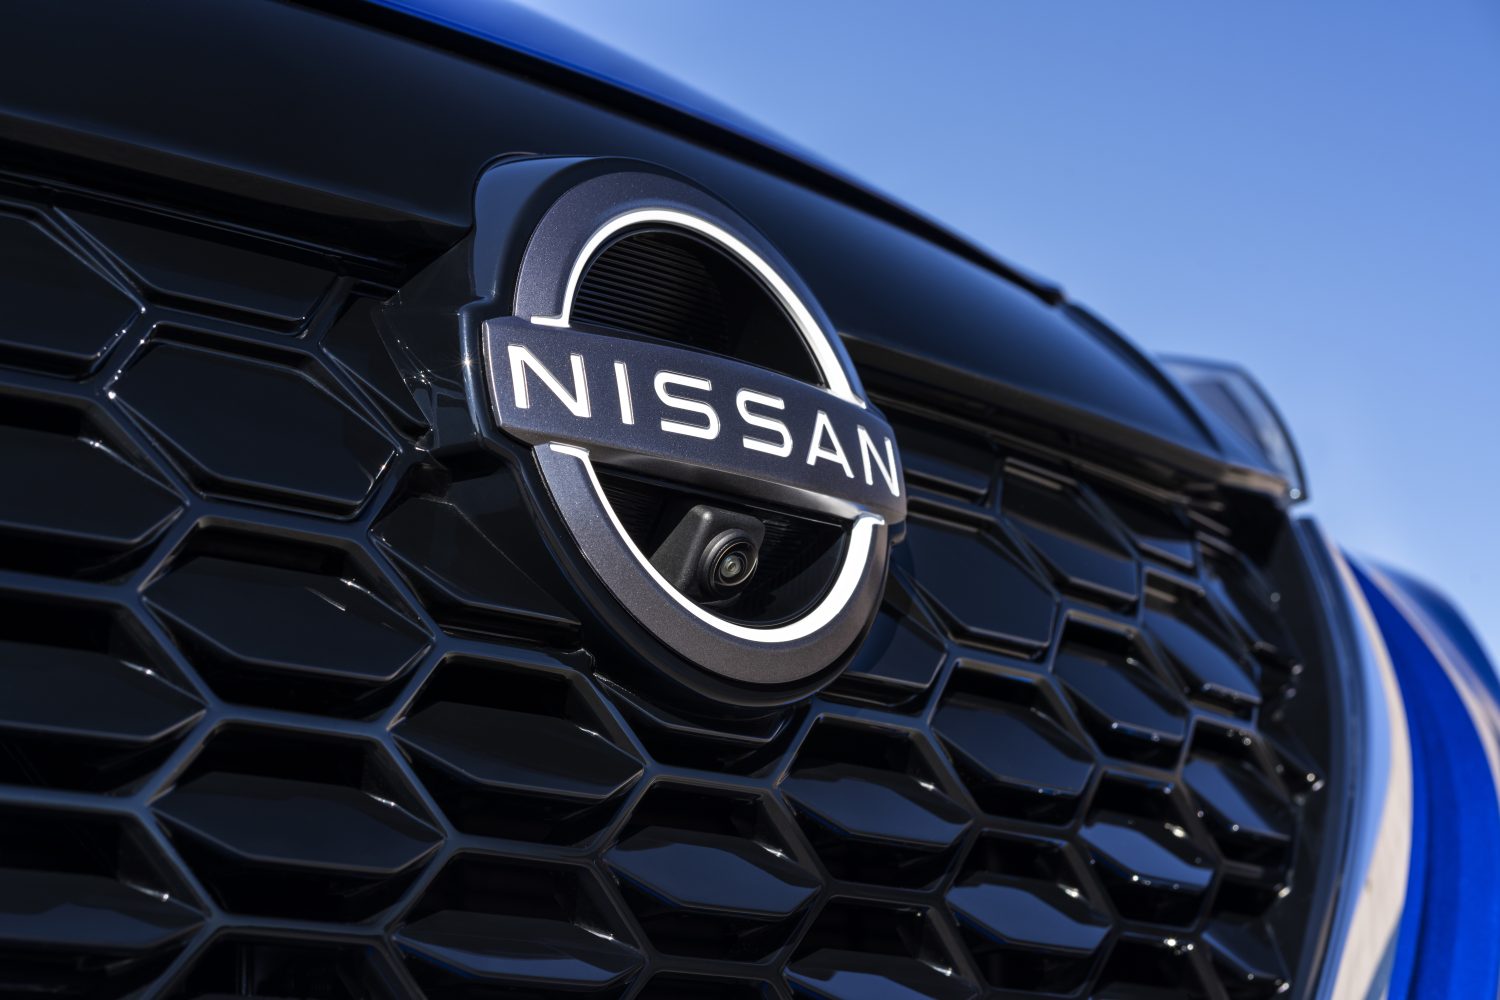 Logo de Nissan